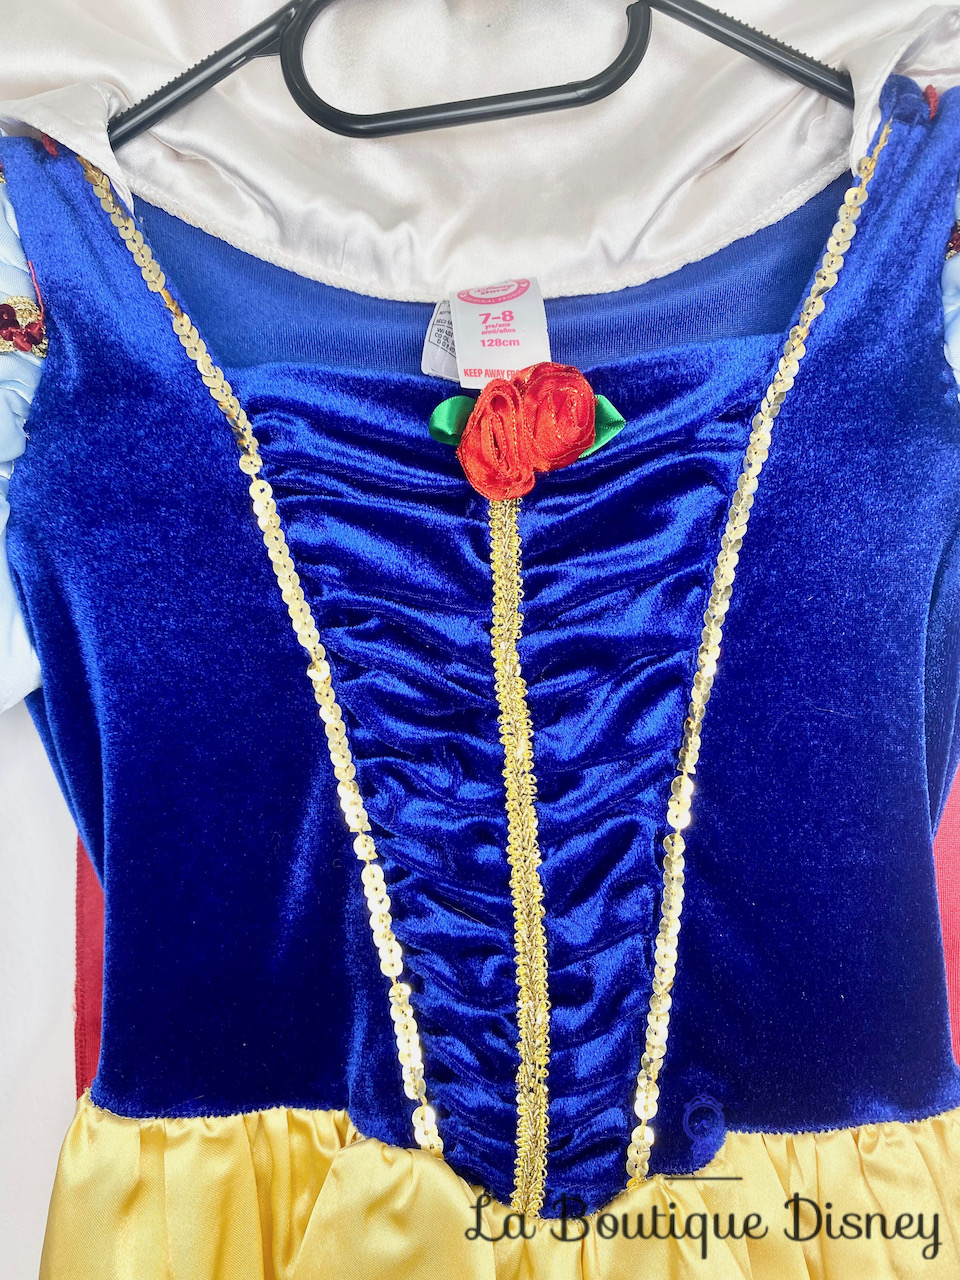 Déguisement robe 'Blanche Neige' - bleu/jaune - Kiabi - 23.00€